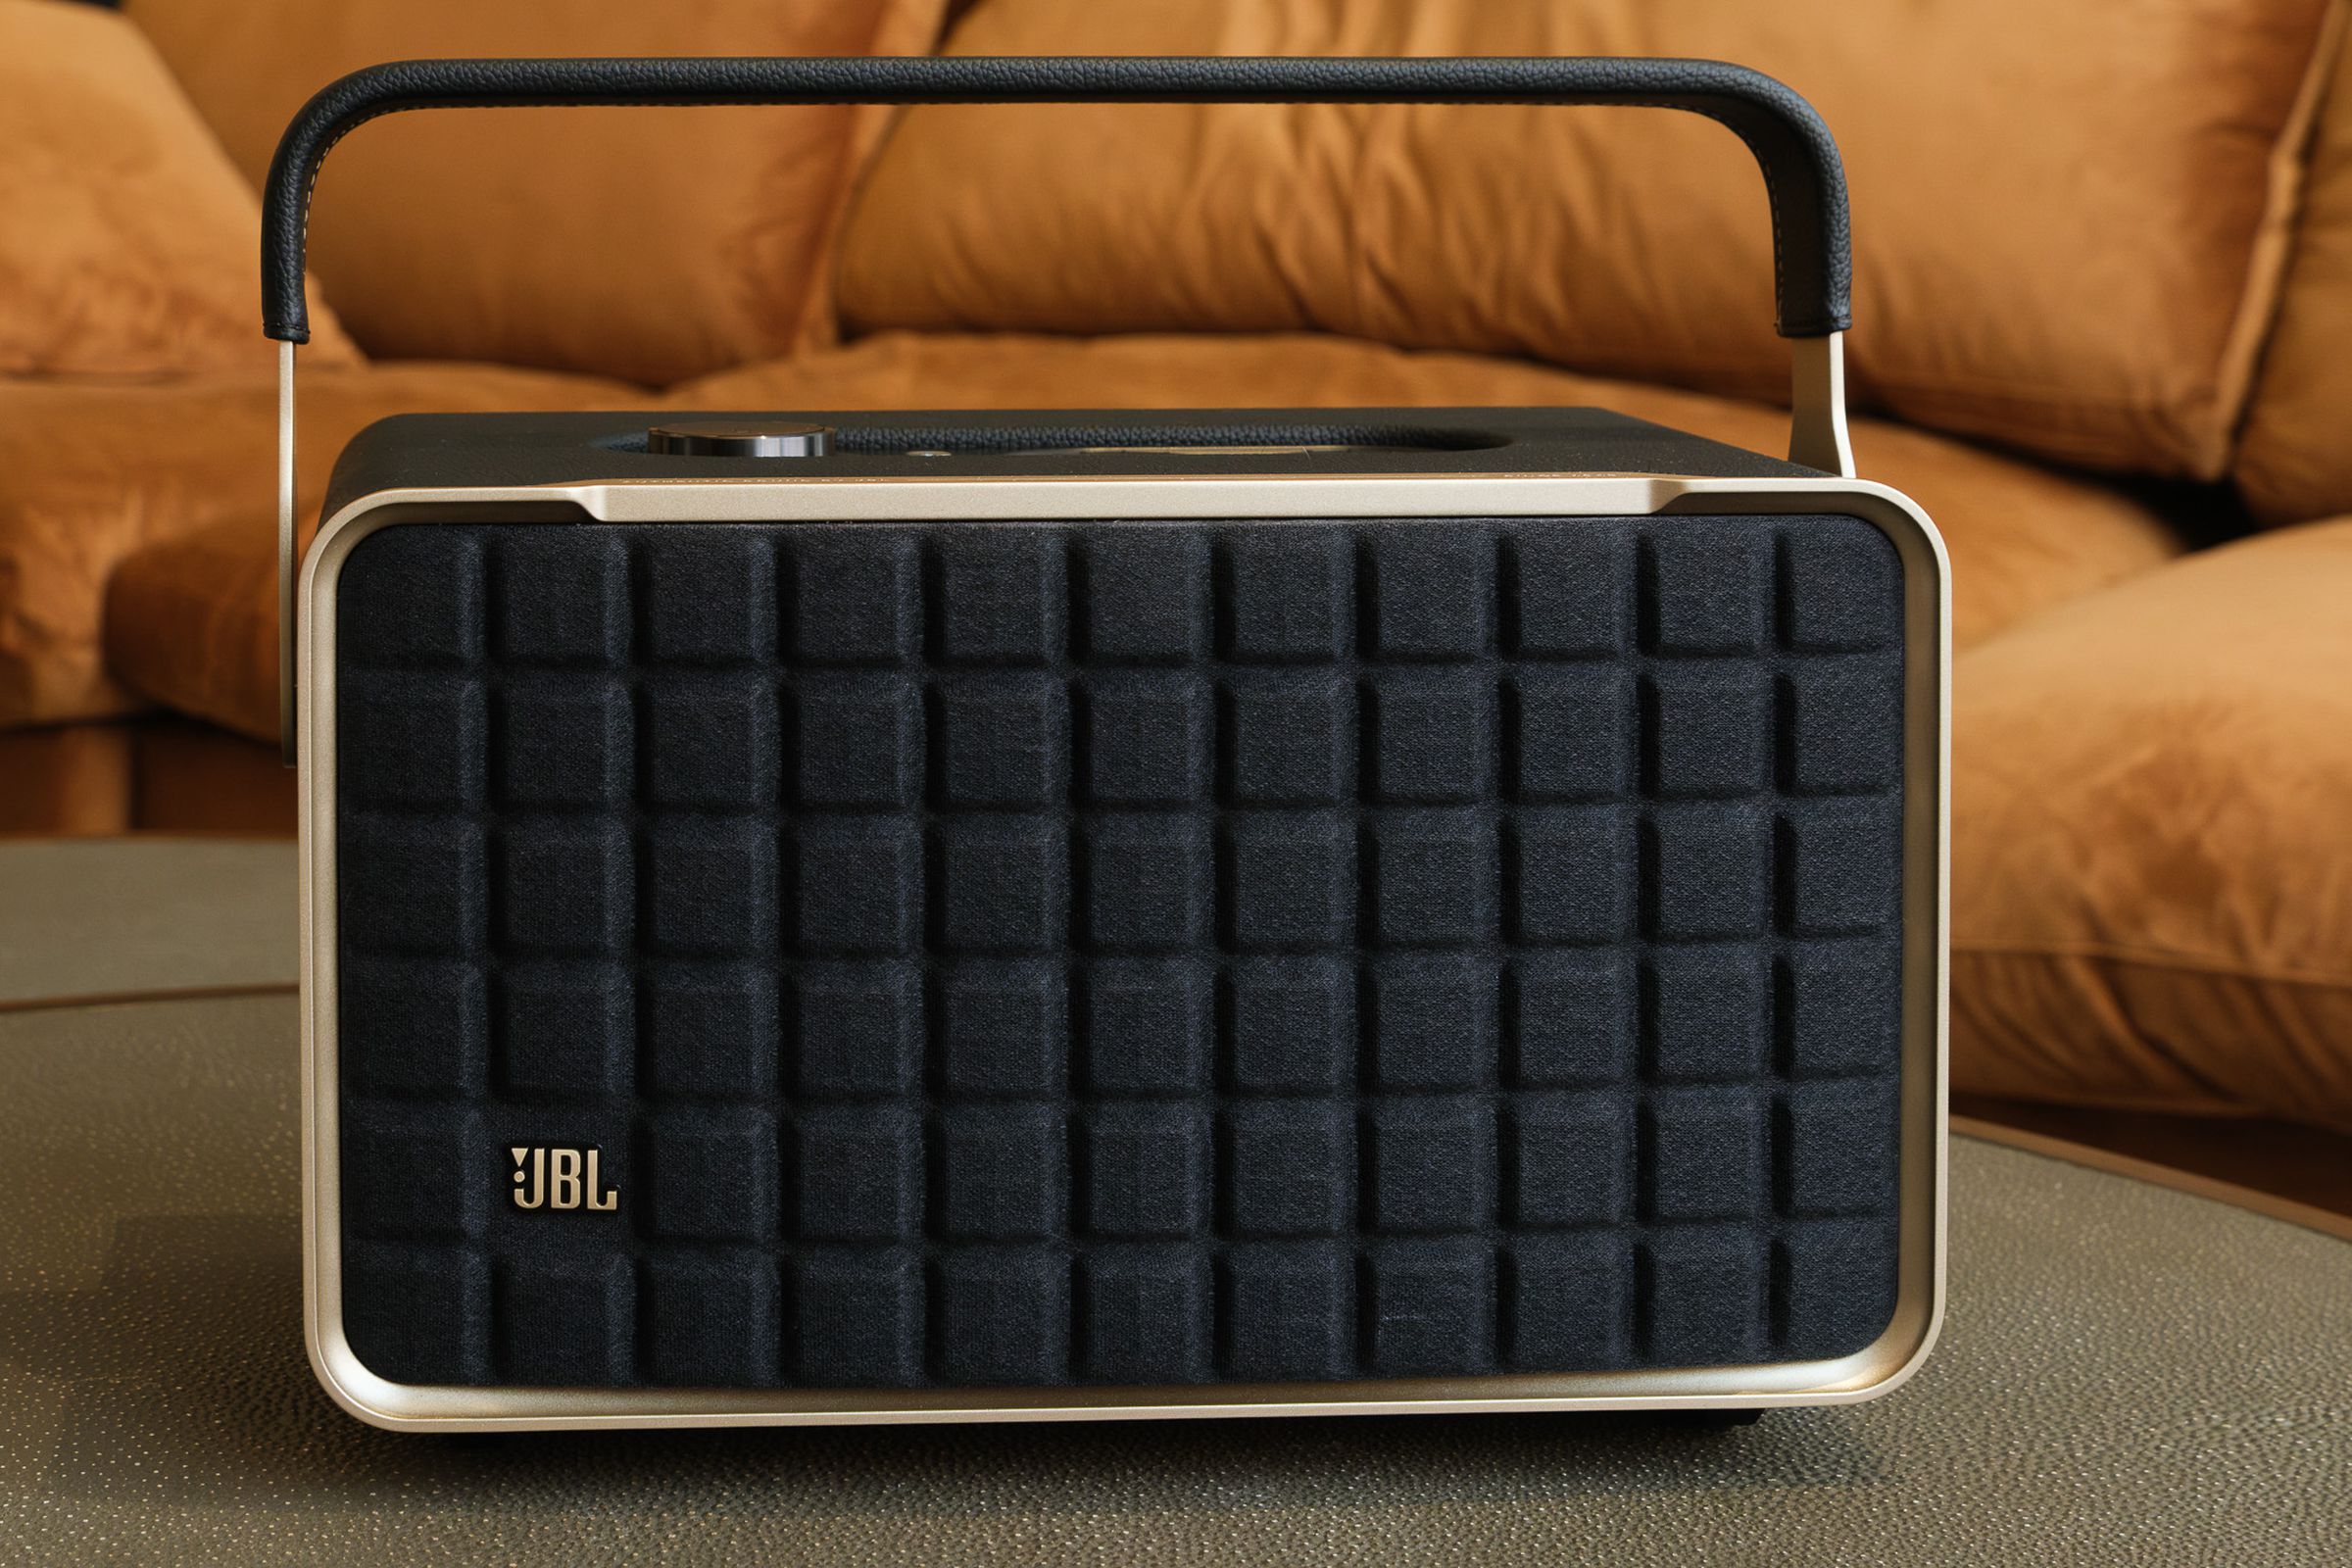 A photo of JBL’s Authentics 300 smart speaker.